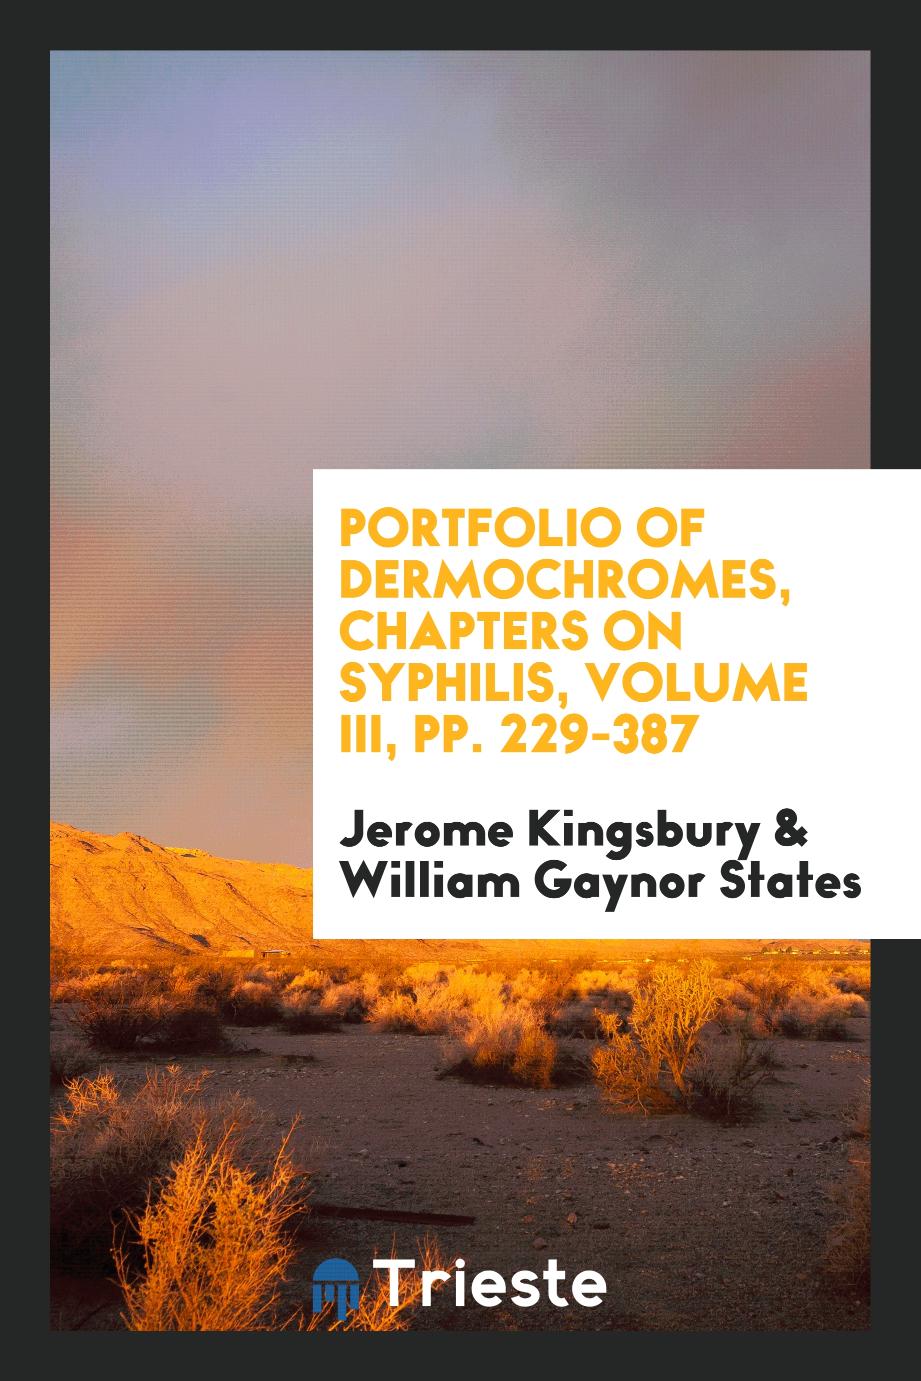 Portfolio of dermochromes, chapters on syphilis, volume III, pp. 229-387